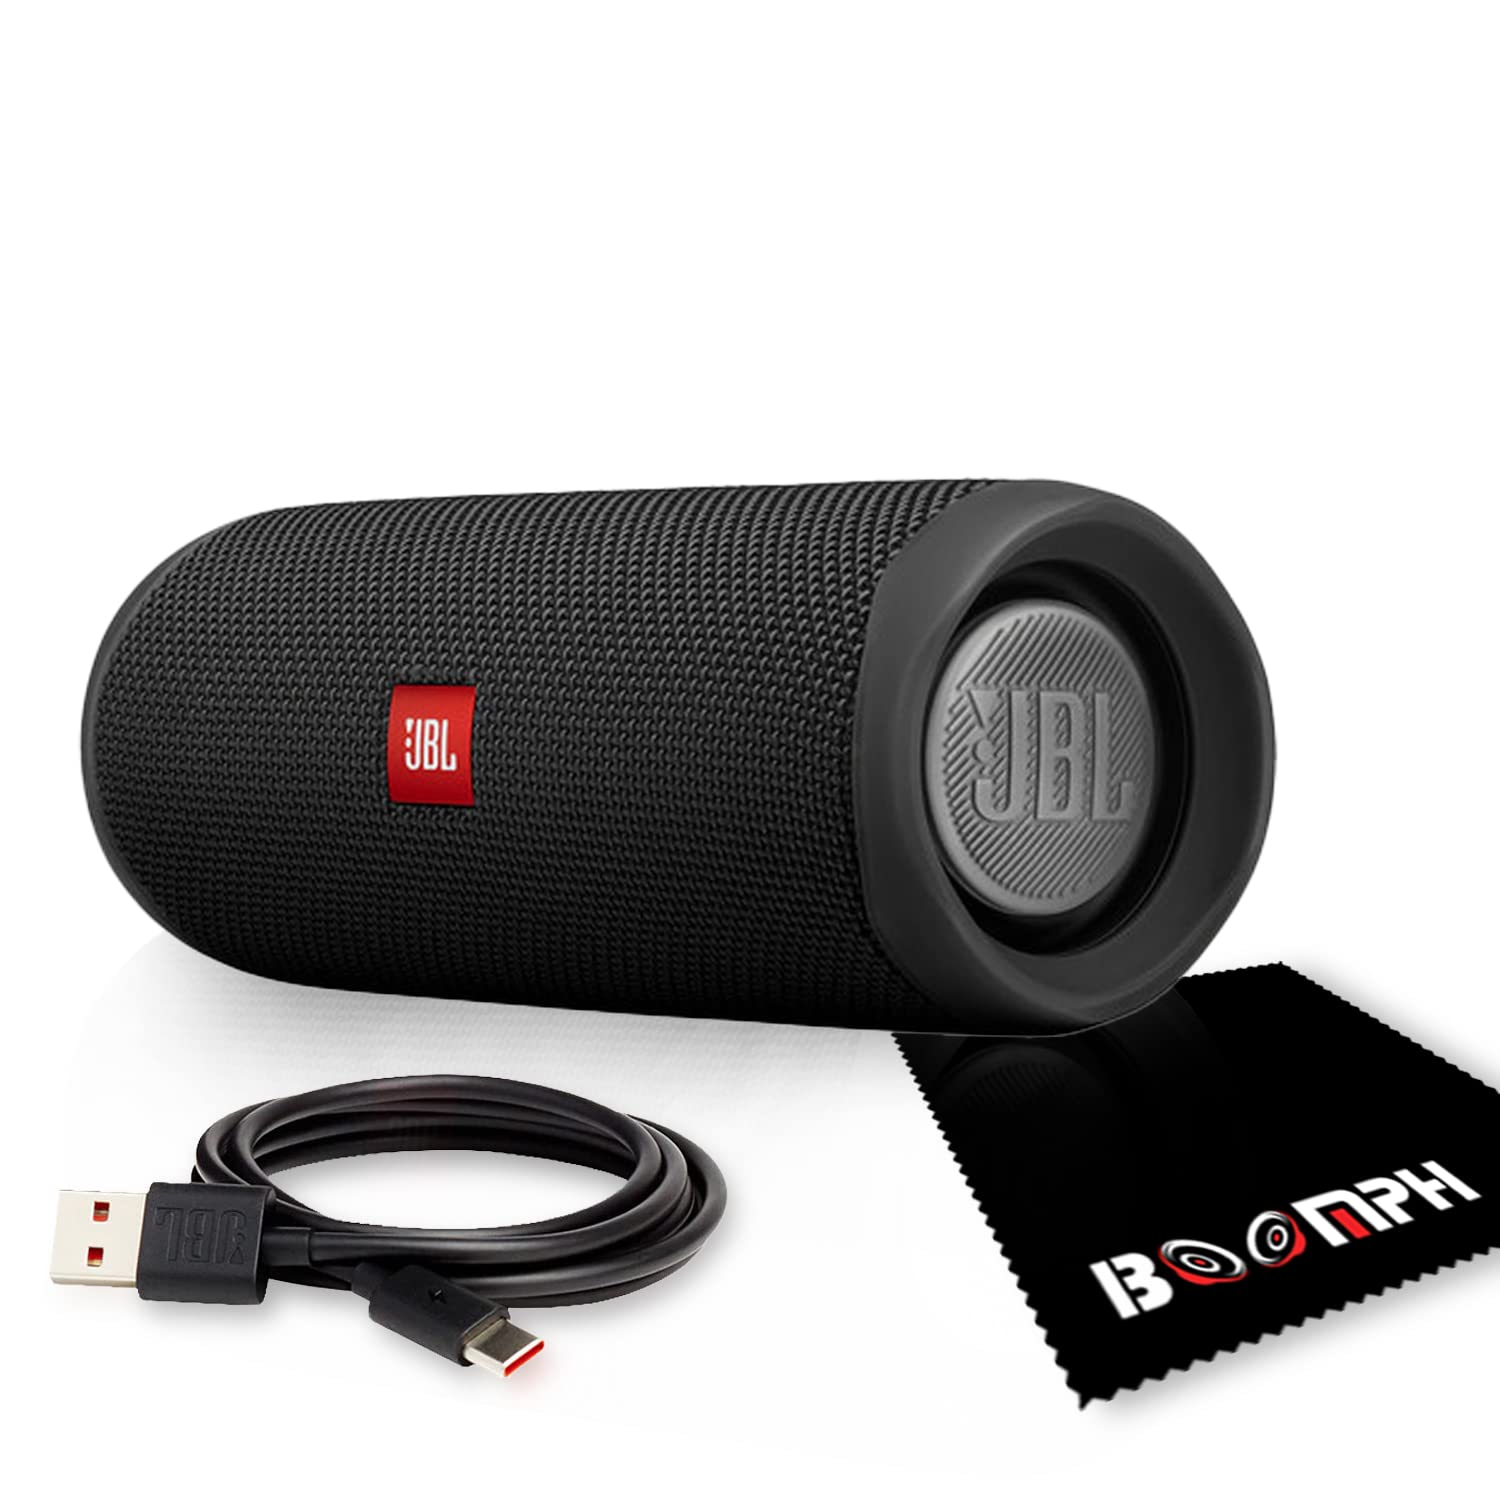 JBL Flip 5 Wireless Portable Bluetooth Speaker - one of the best from top 10 speaker brands in India.